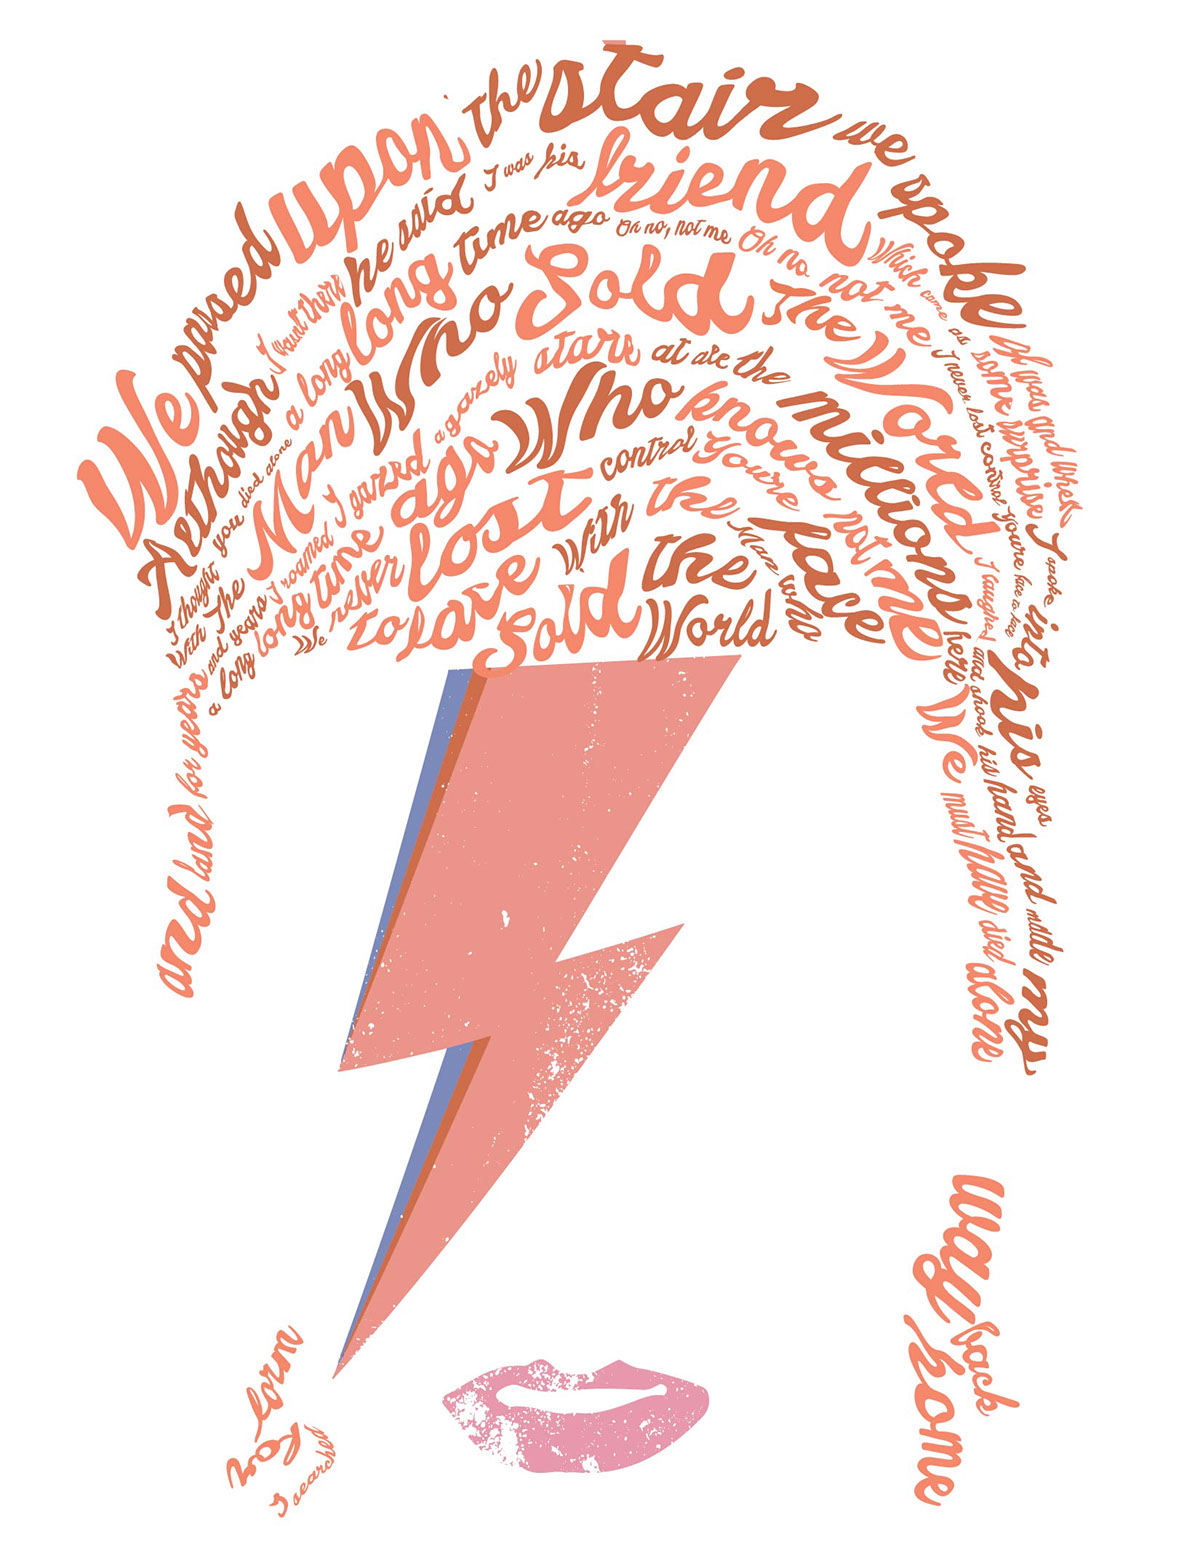 music Word Art david bowie Ziggy Stardust tribute